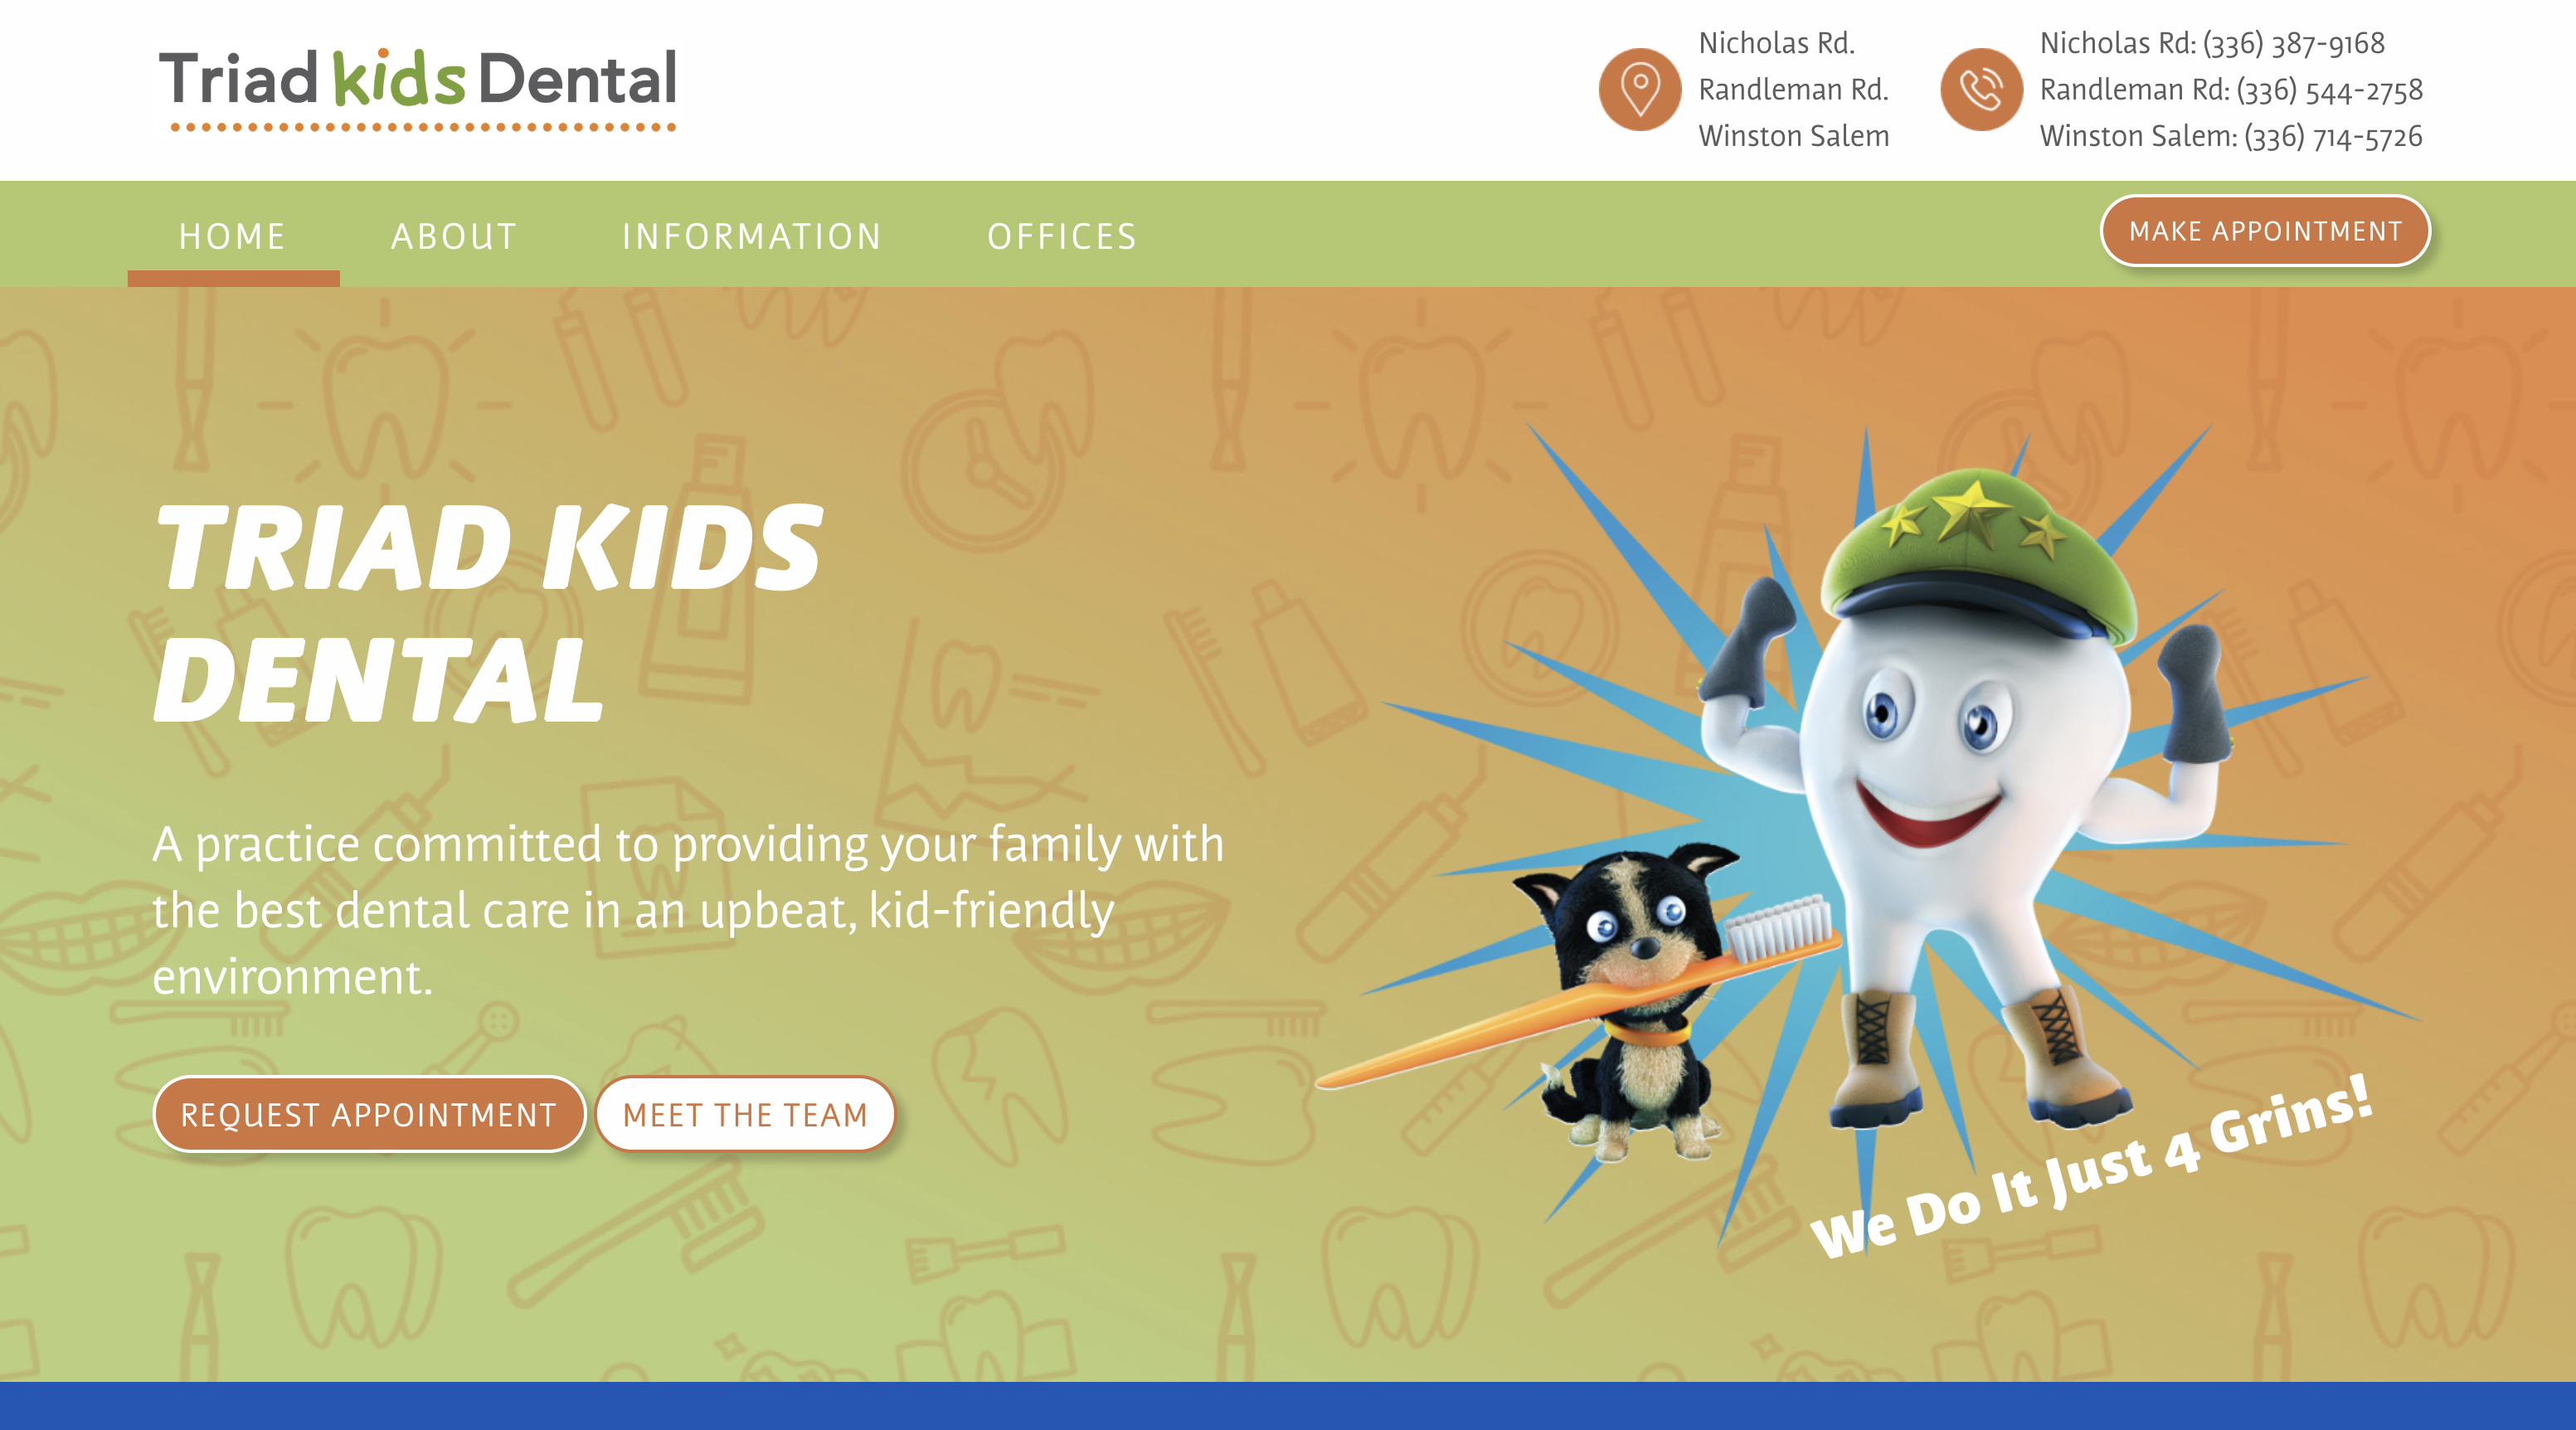 Custom Website Platform for Dental Support Organization image